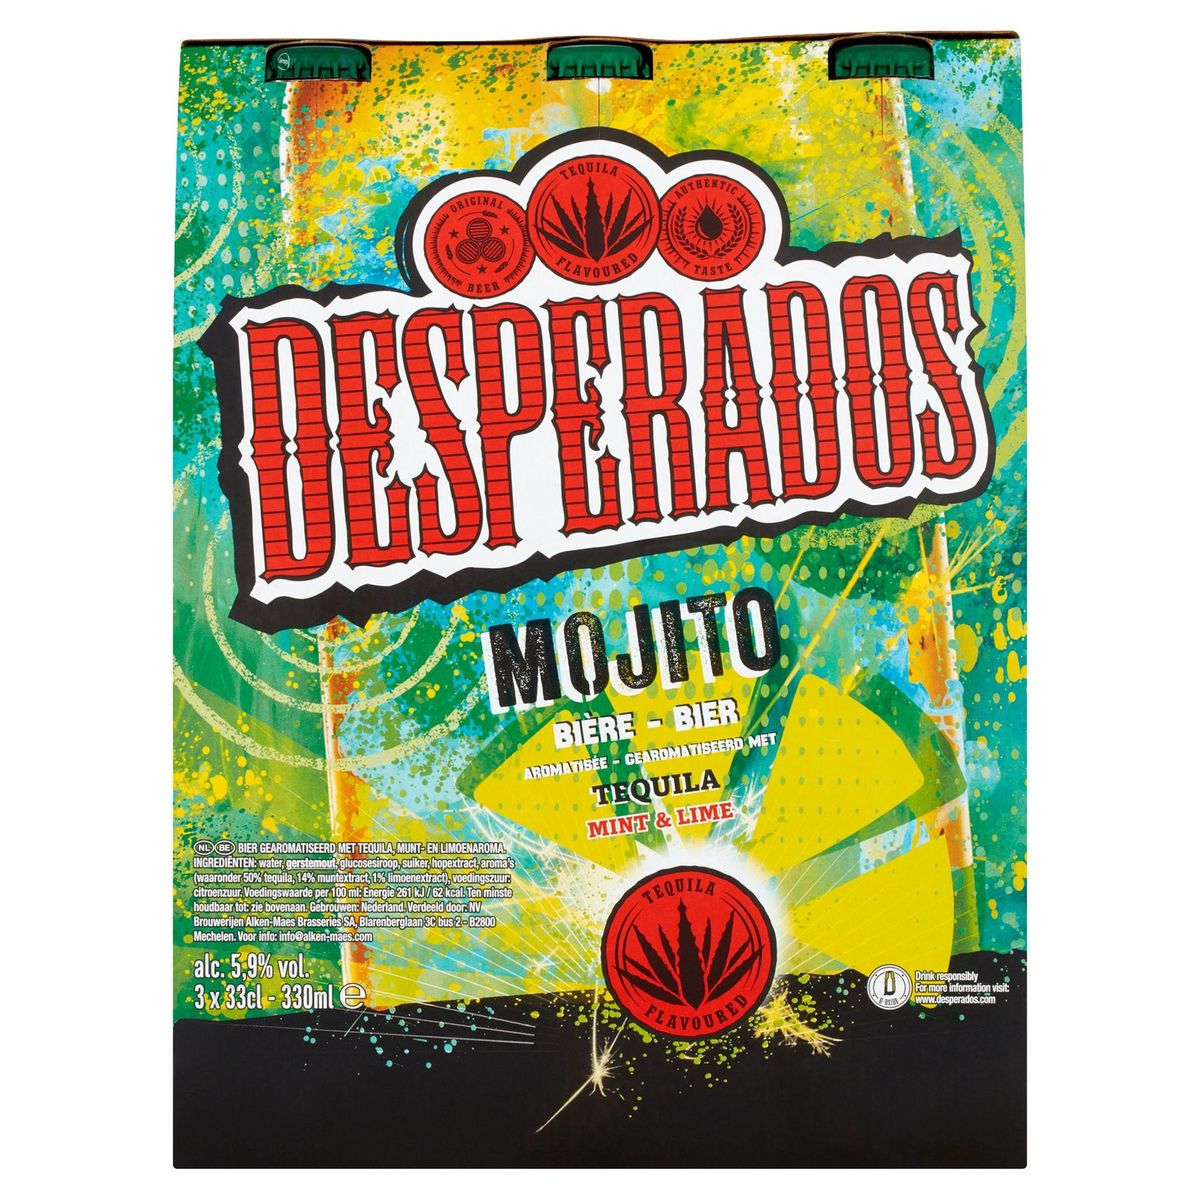 Desperados Bière Tequila-Mojito 5.9% ALC Bouteille 3x33cl